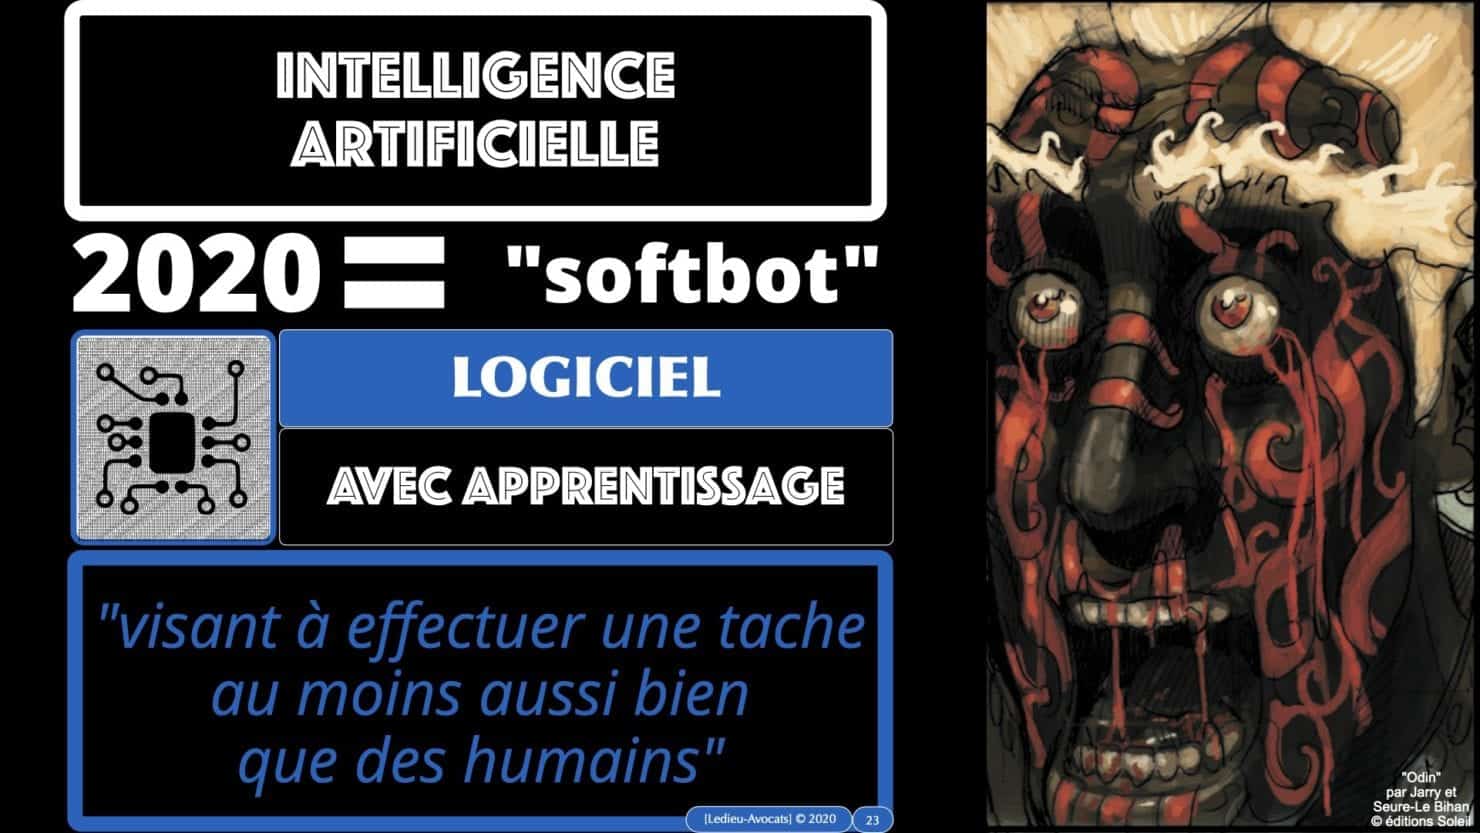 Intelligence artificielle softbot